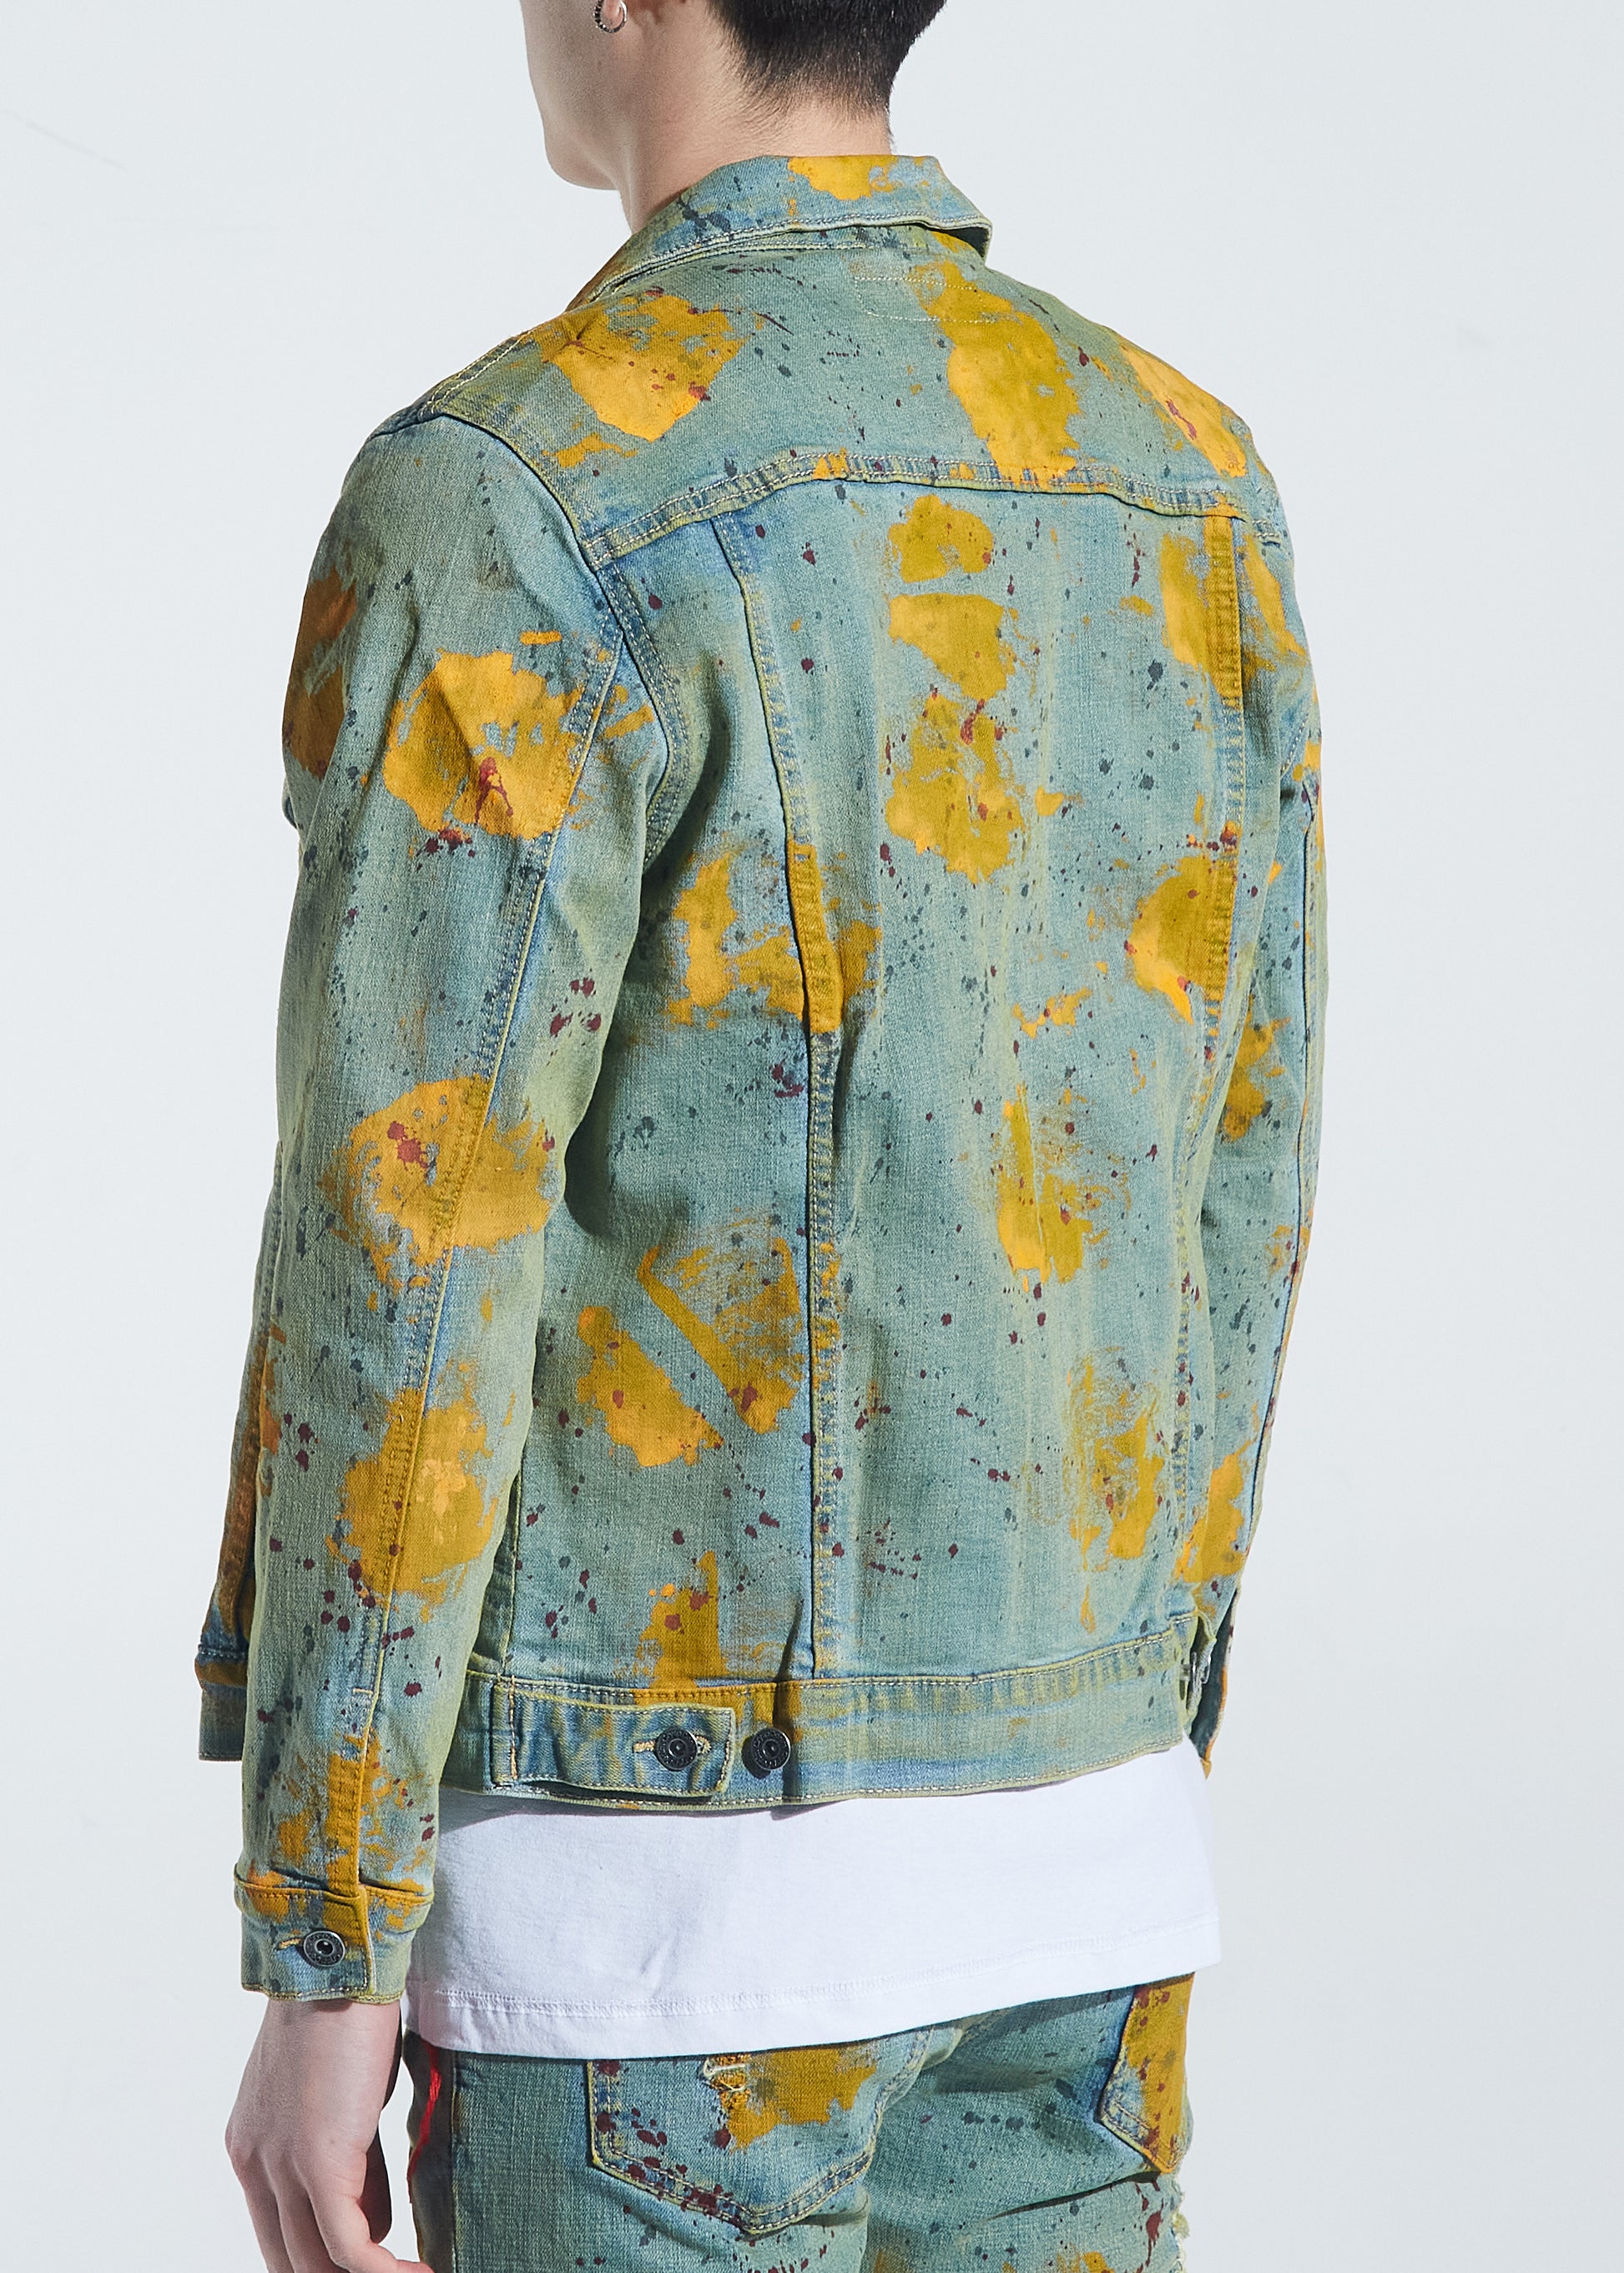 Bering Denim Jacket (Light Tie Dye) – Crysp Denim